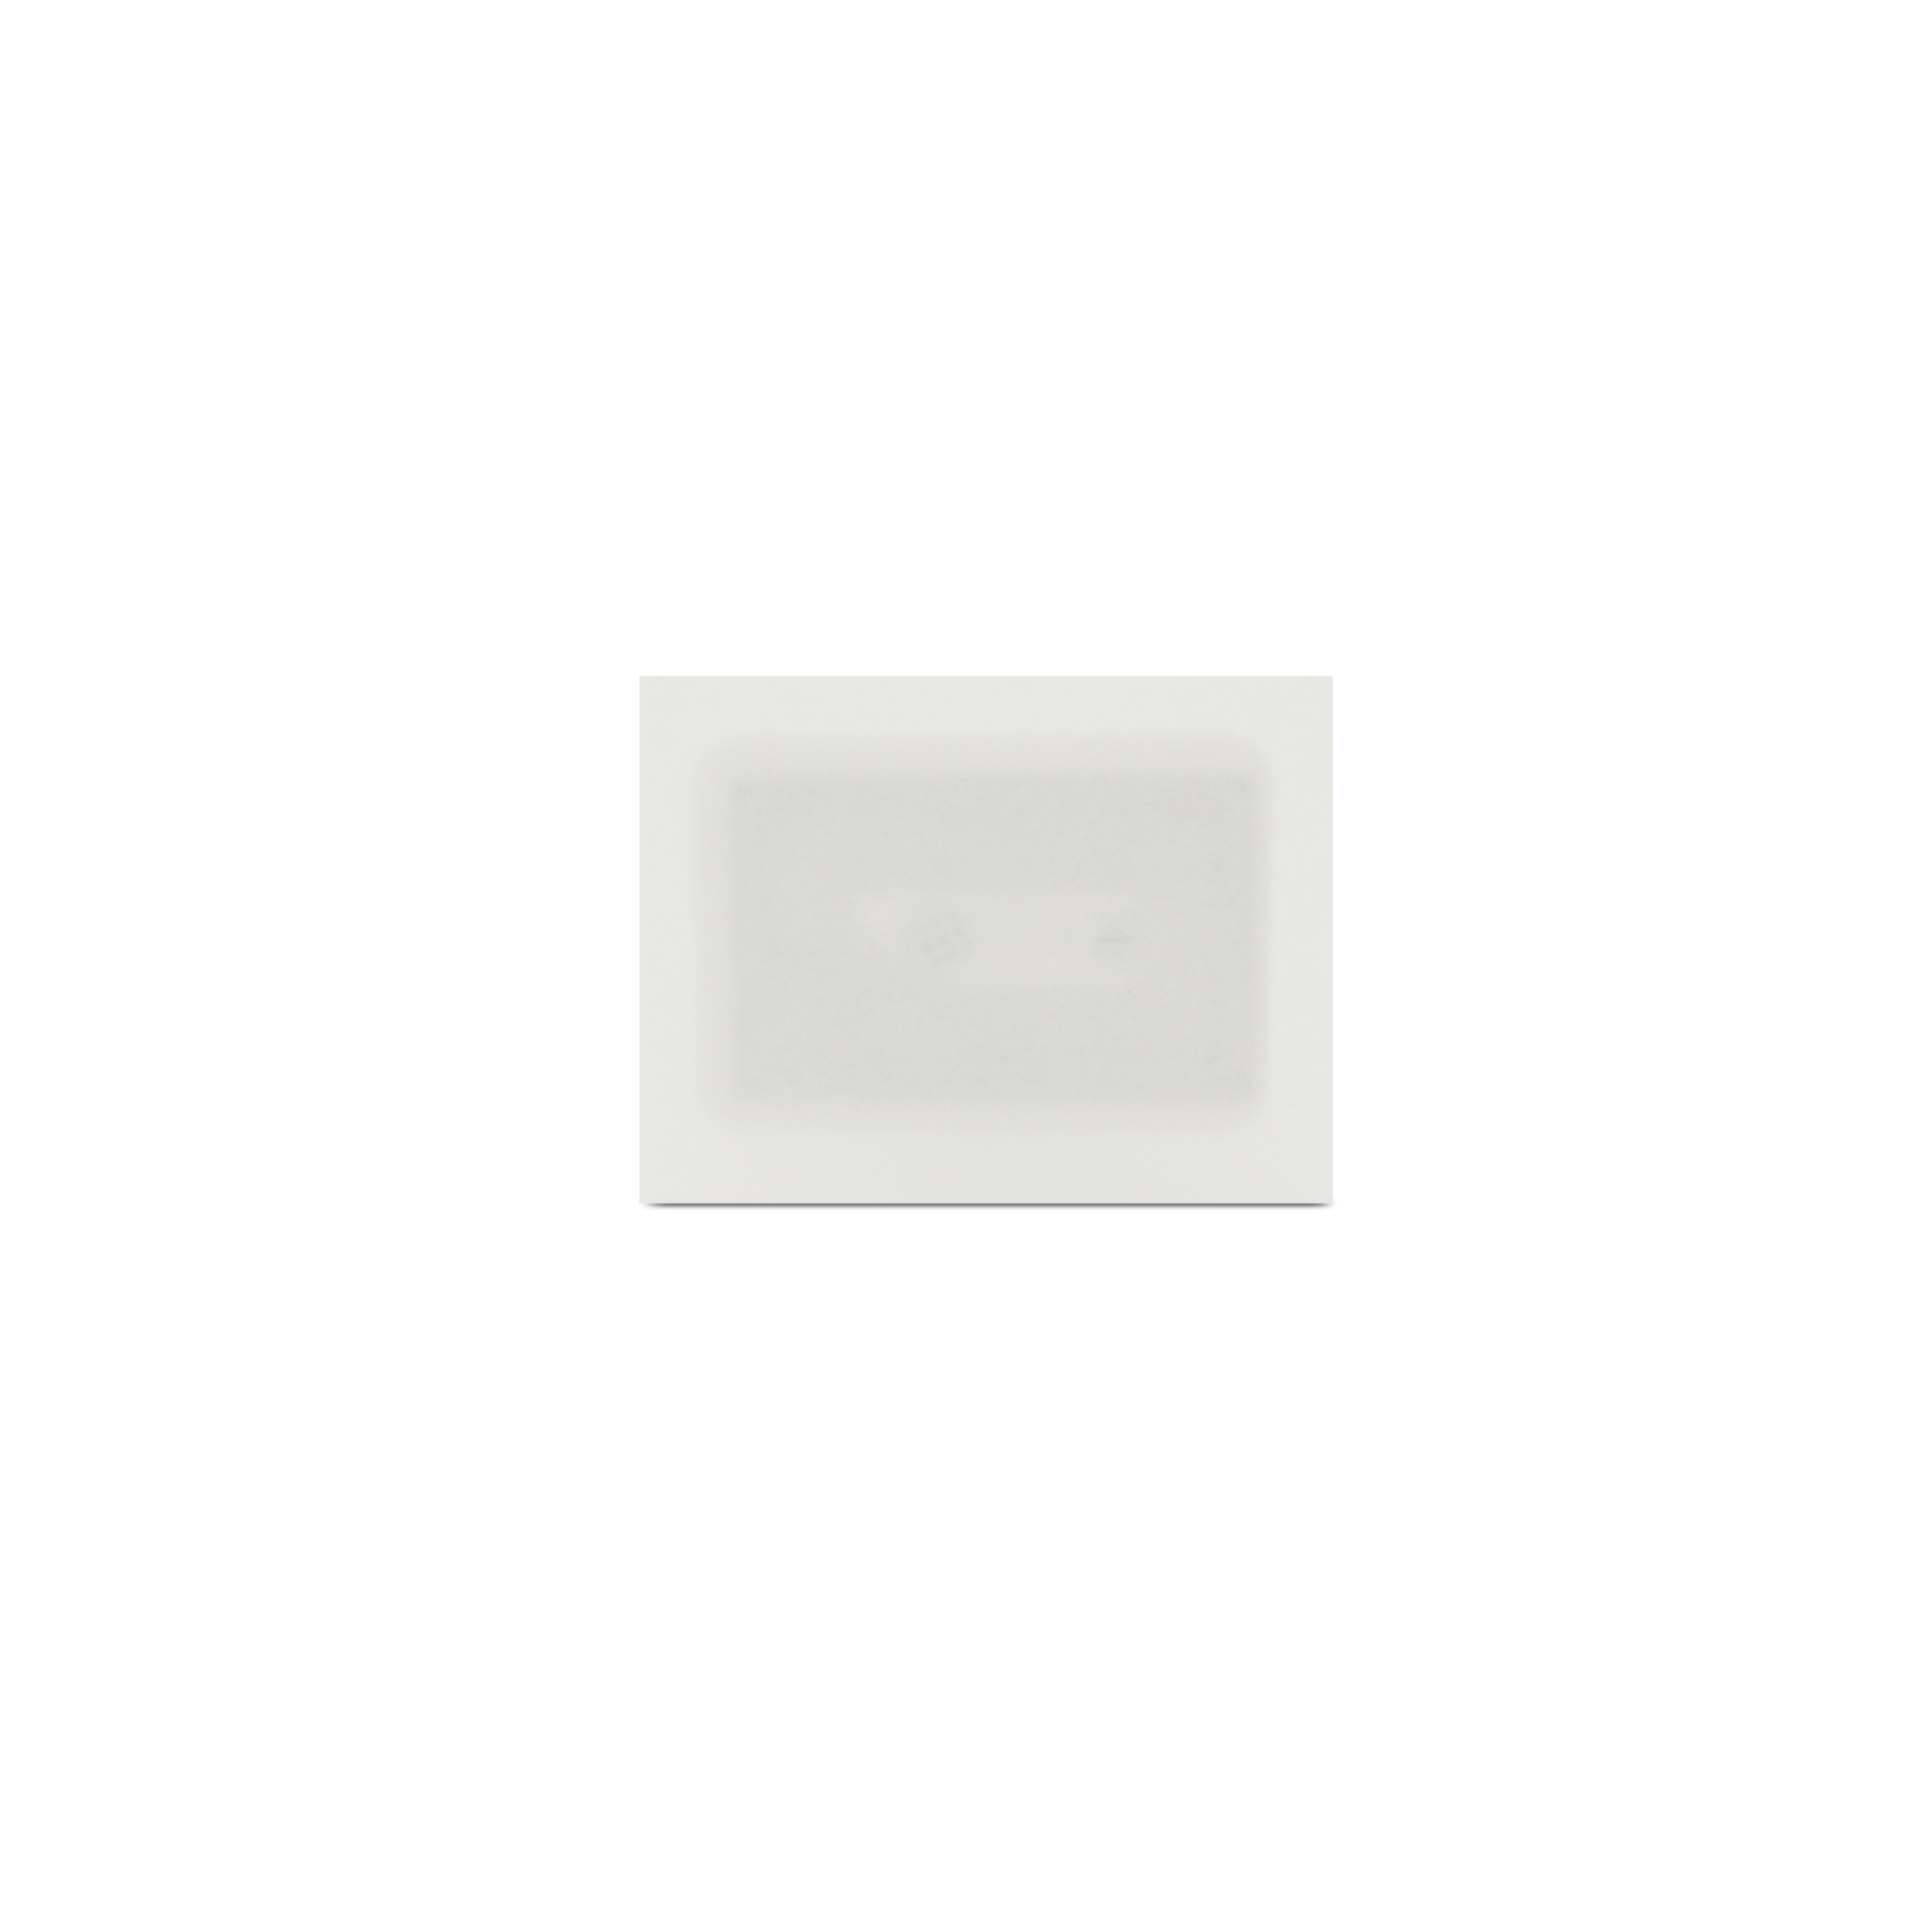 NFC Sticker PET - 20 x 15 mm - NTAG216 - 924 Byte - white